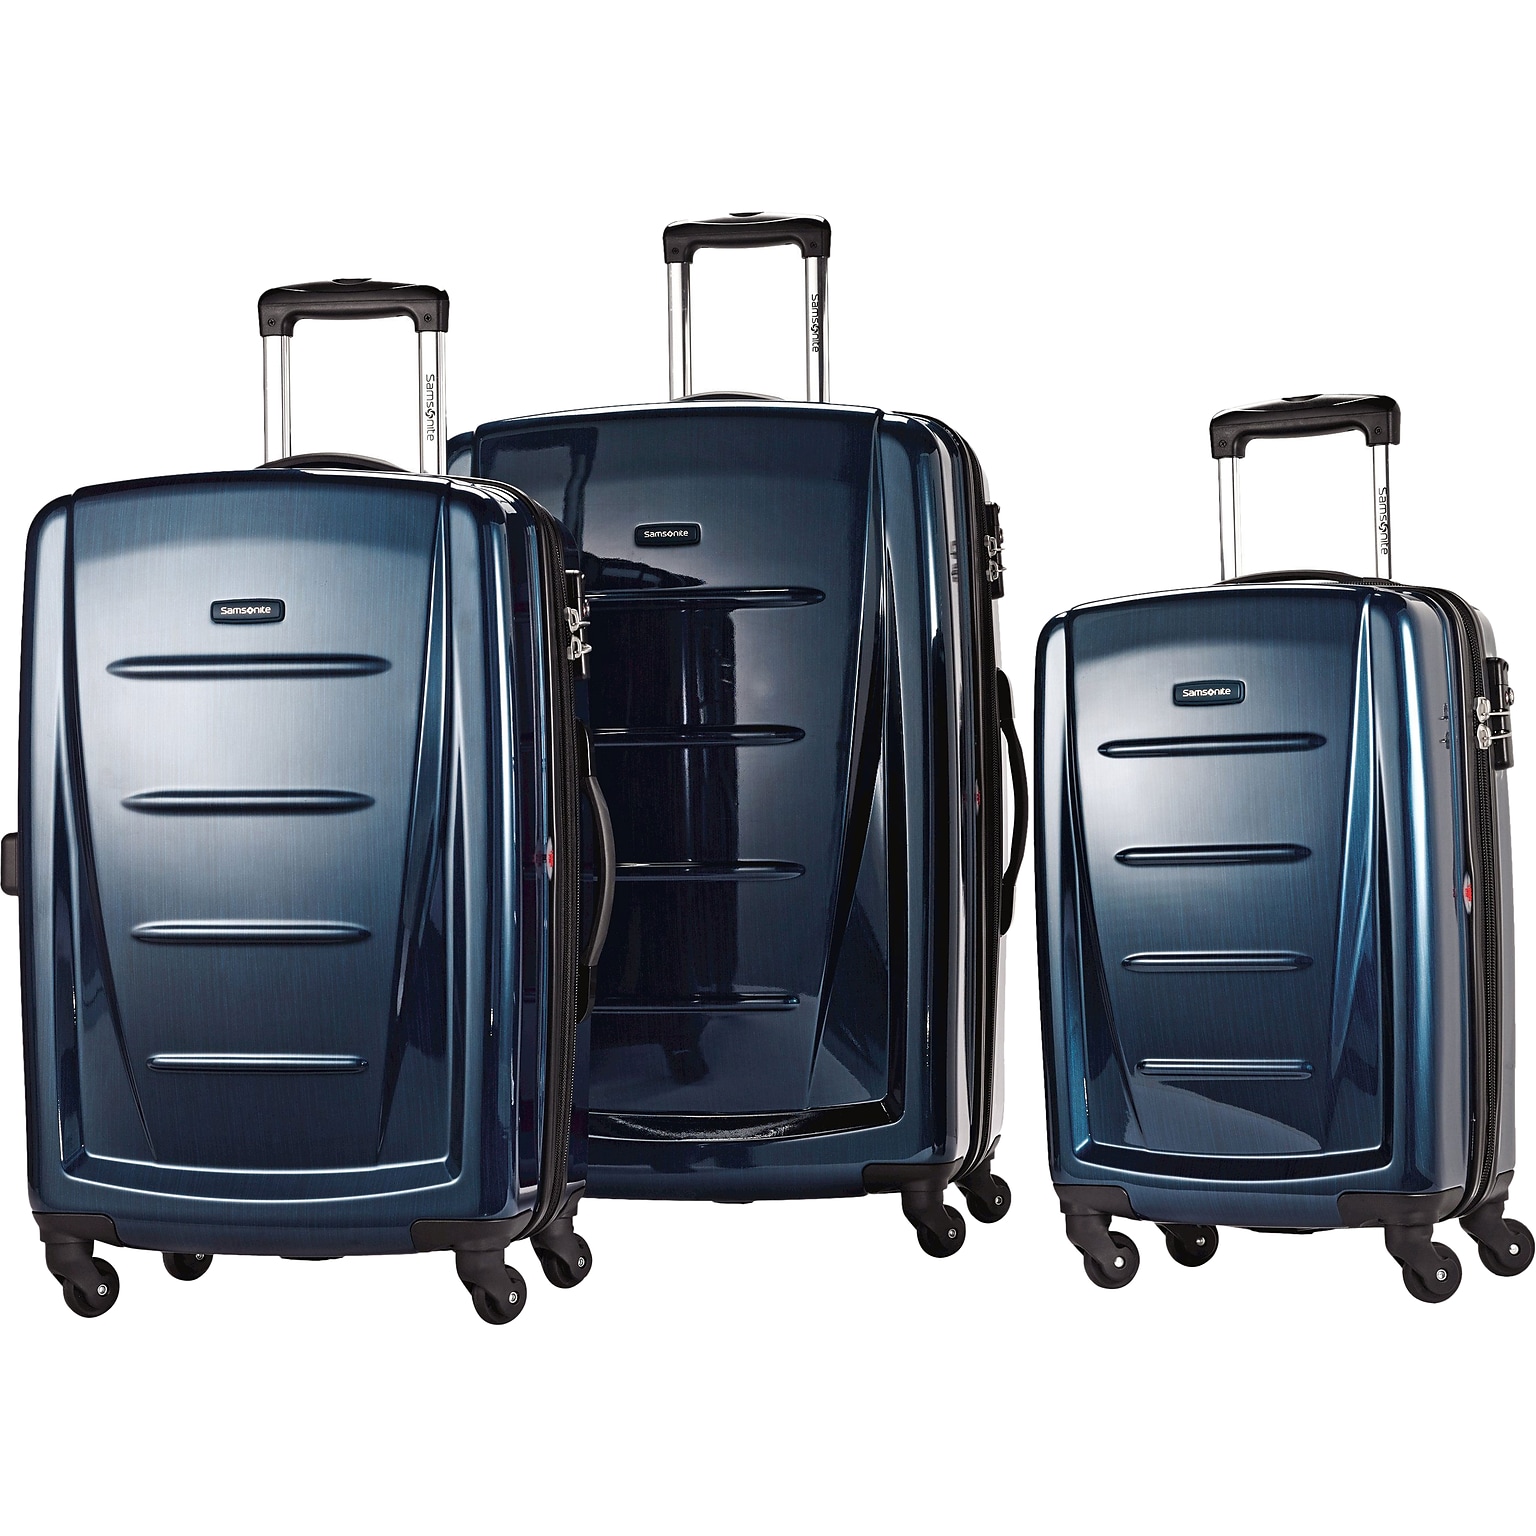 Samsonite Winfield 2 Fashion Polycarbonate 3-Piece Luggage Set, Deep Blue (56847-1277)